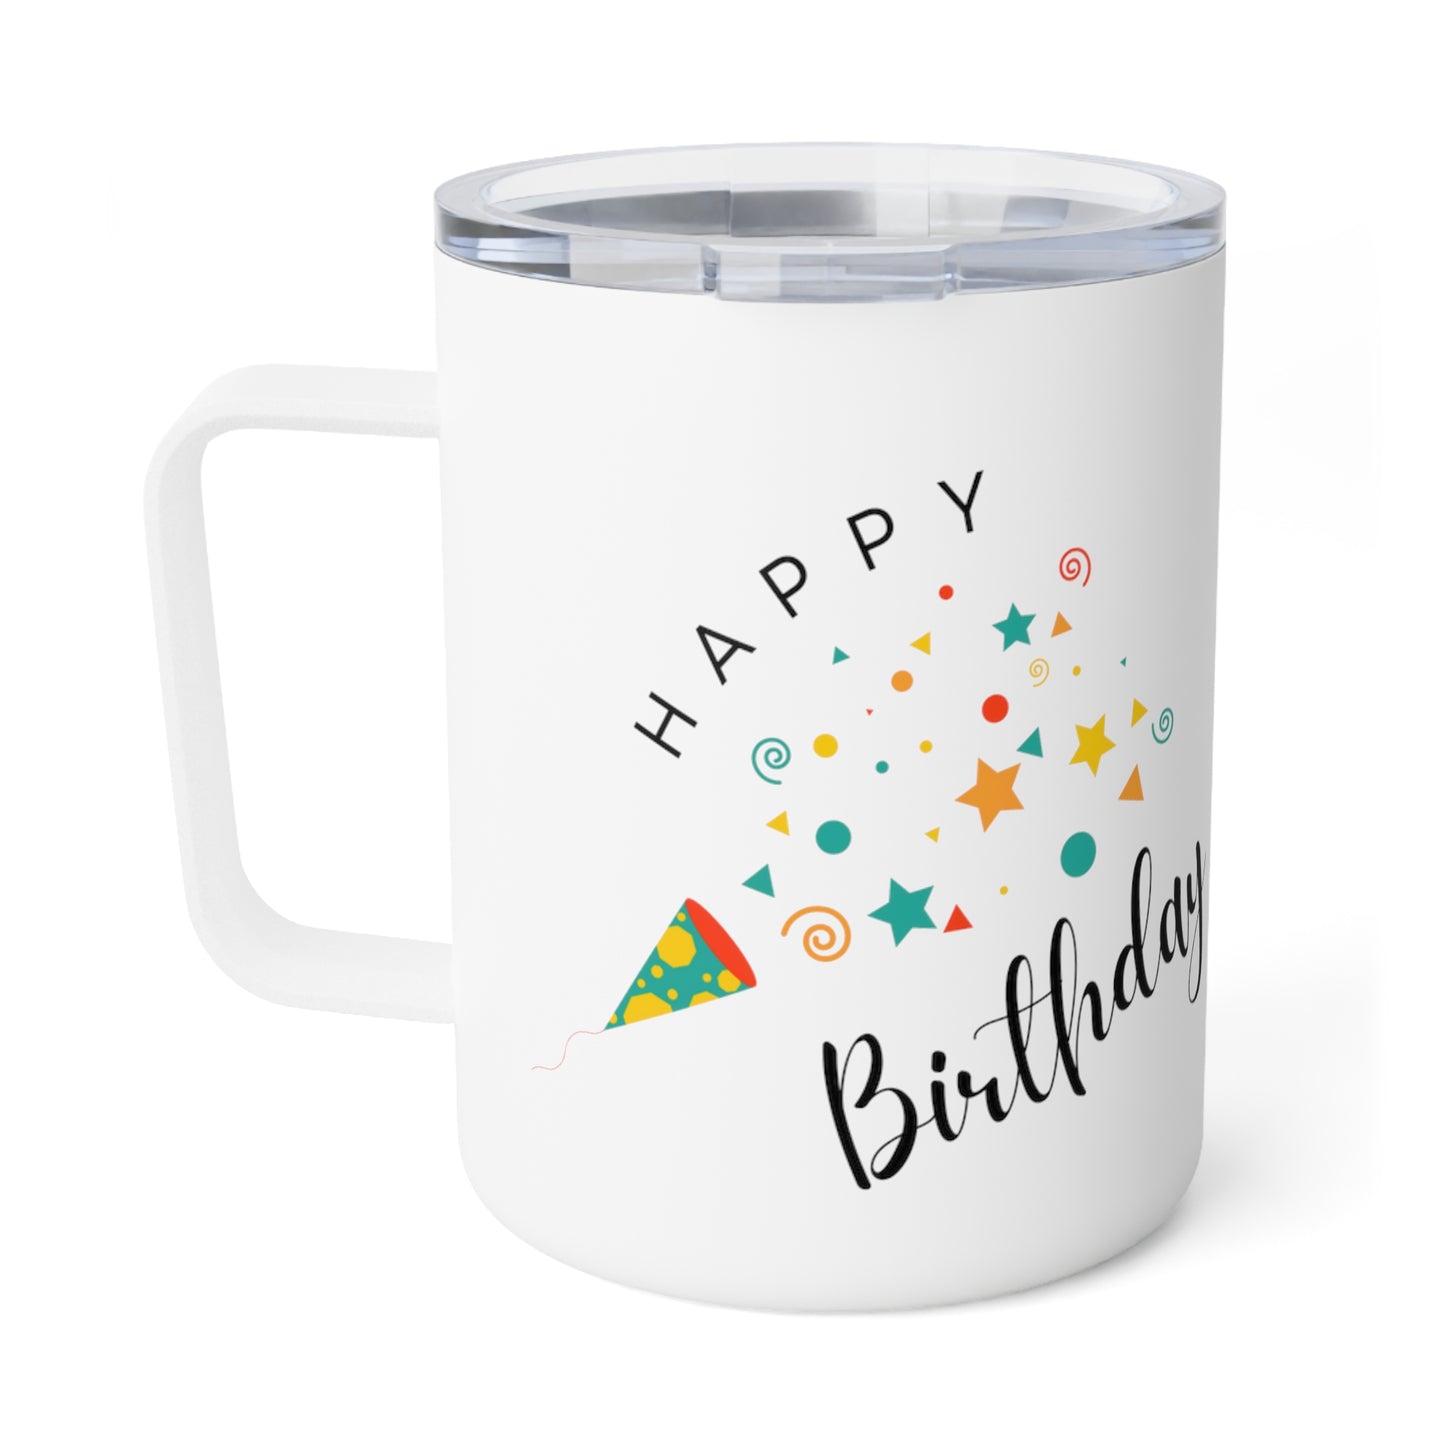 Happy Birthday Insulated Coffee Mug, 10oz